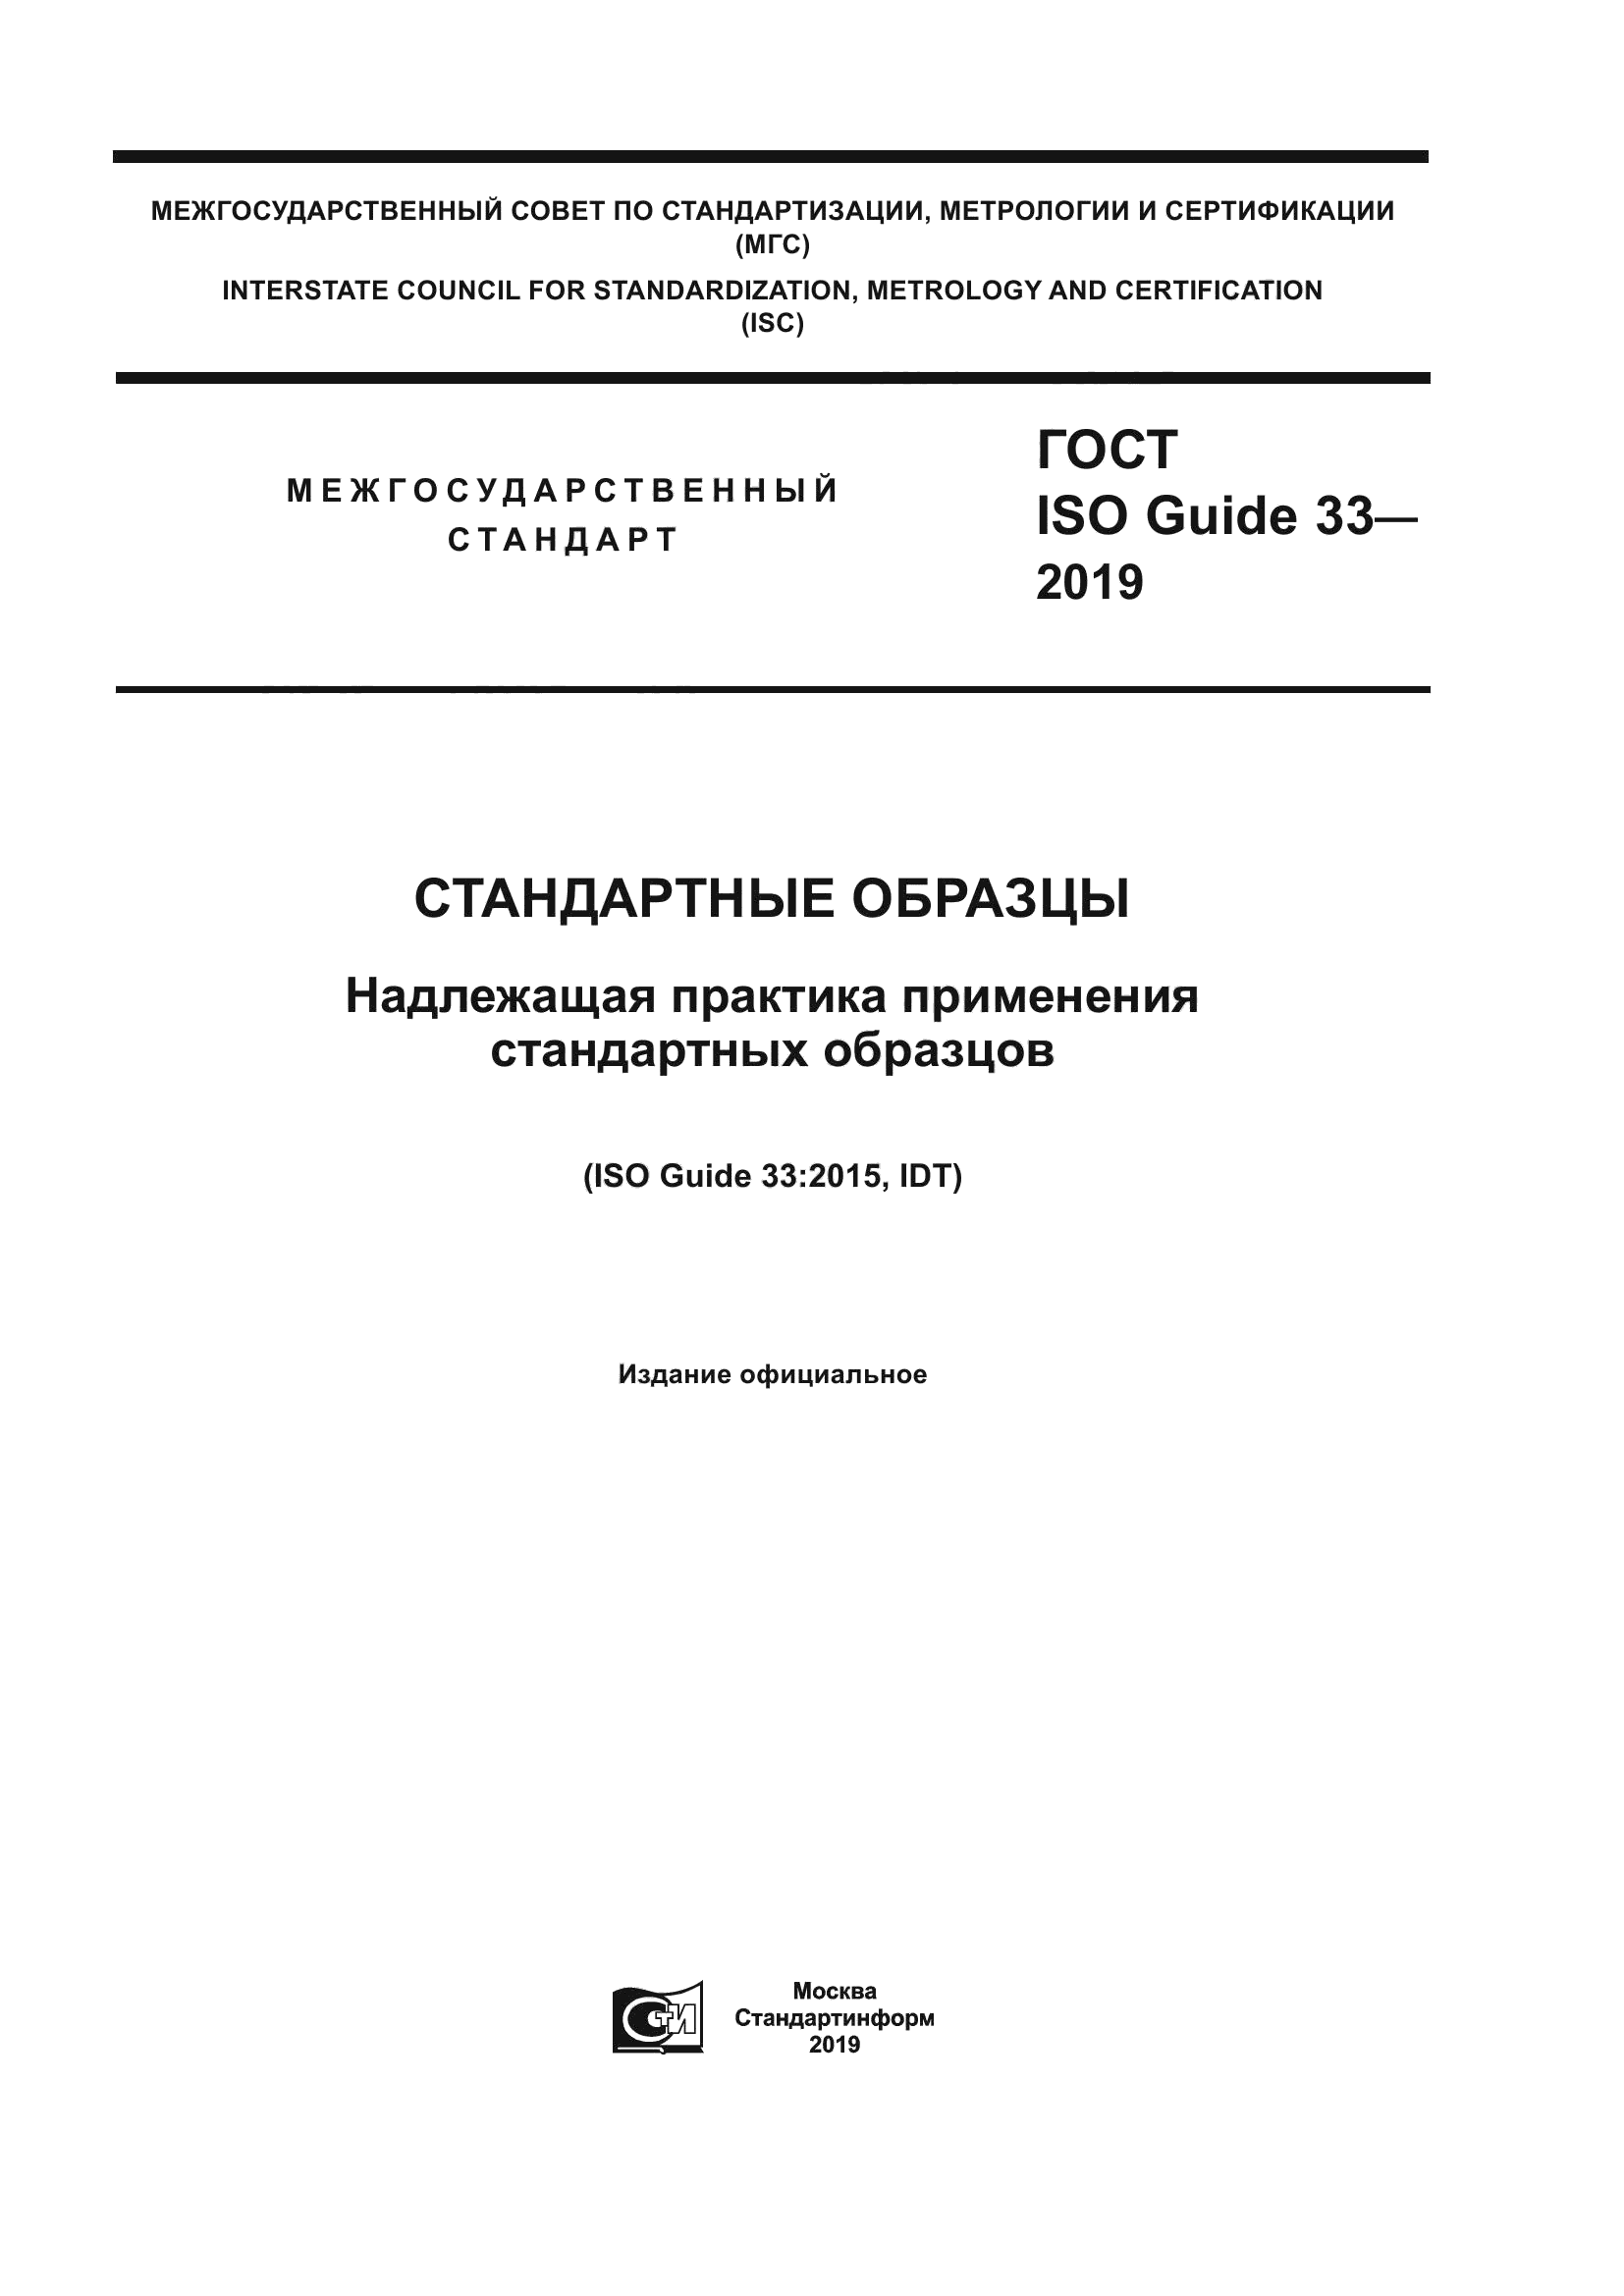 ГОСТ ISO Guide 33-2019